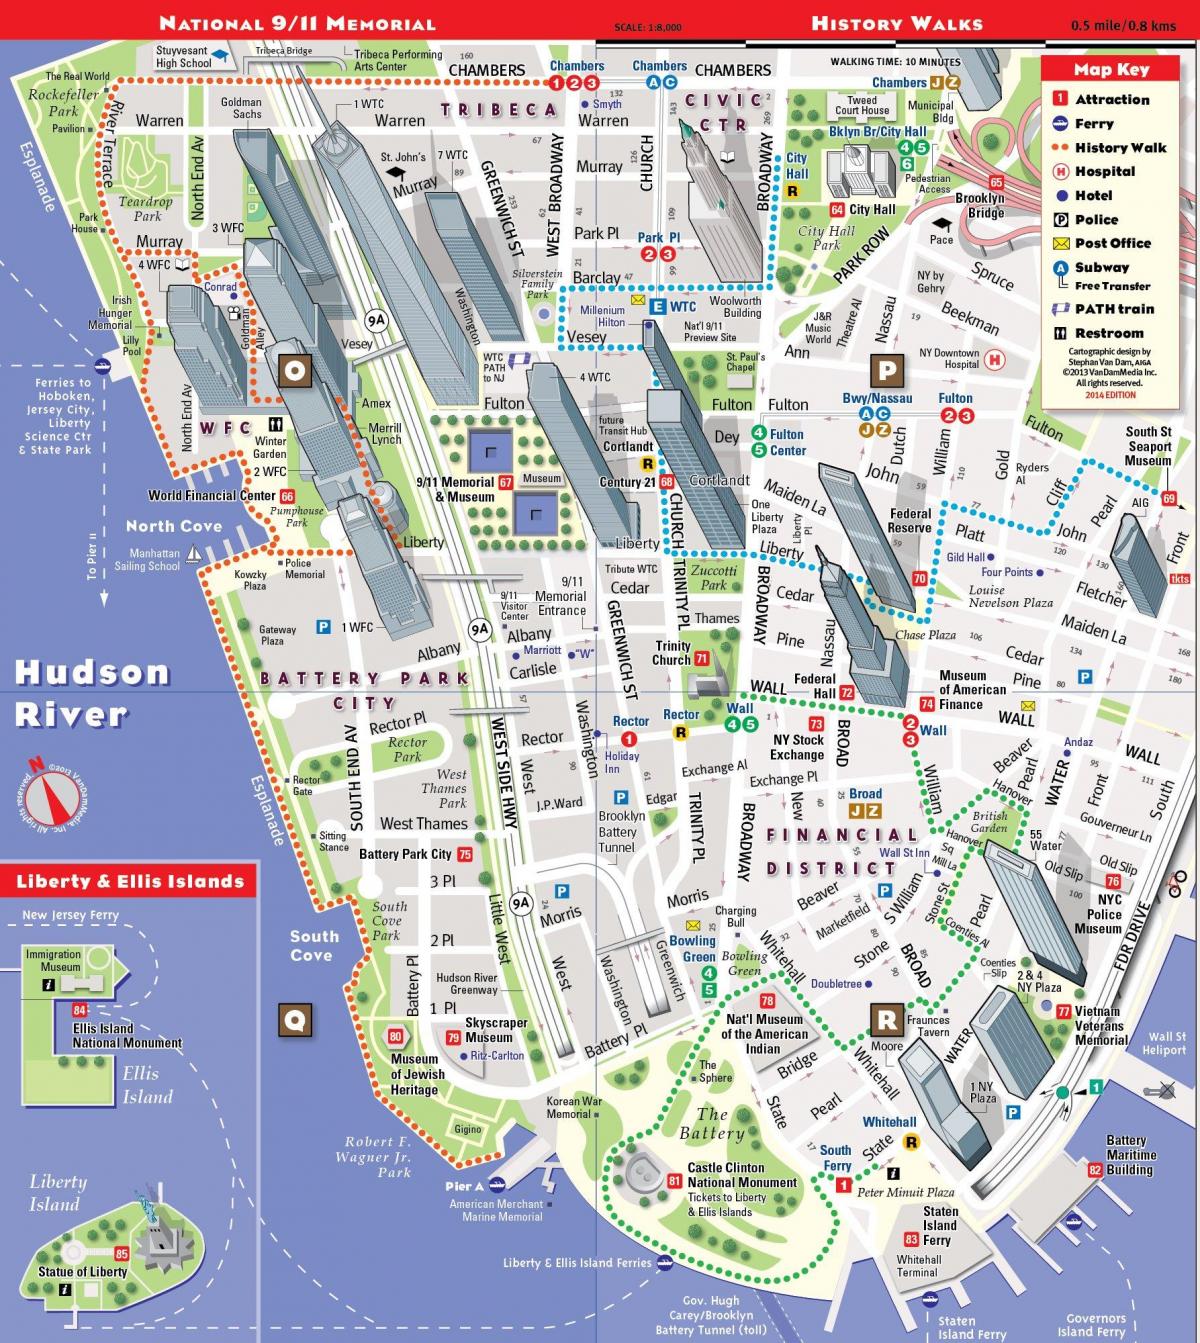 Manhattan mapa turístico